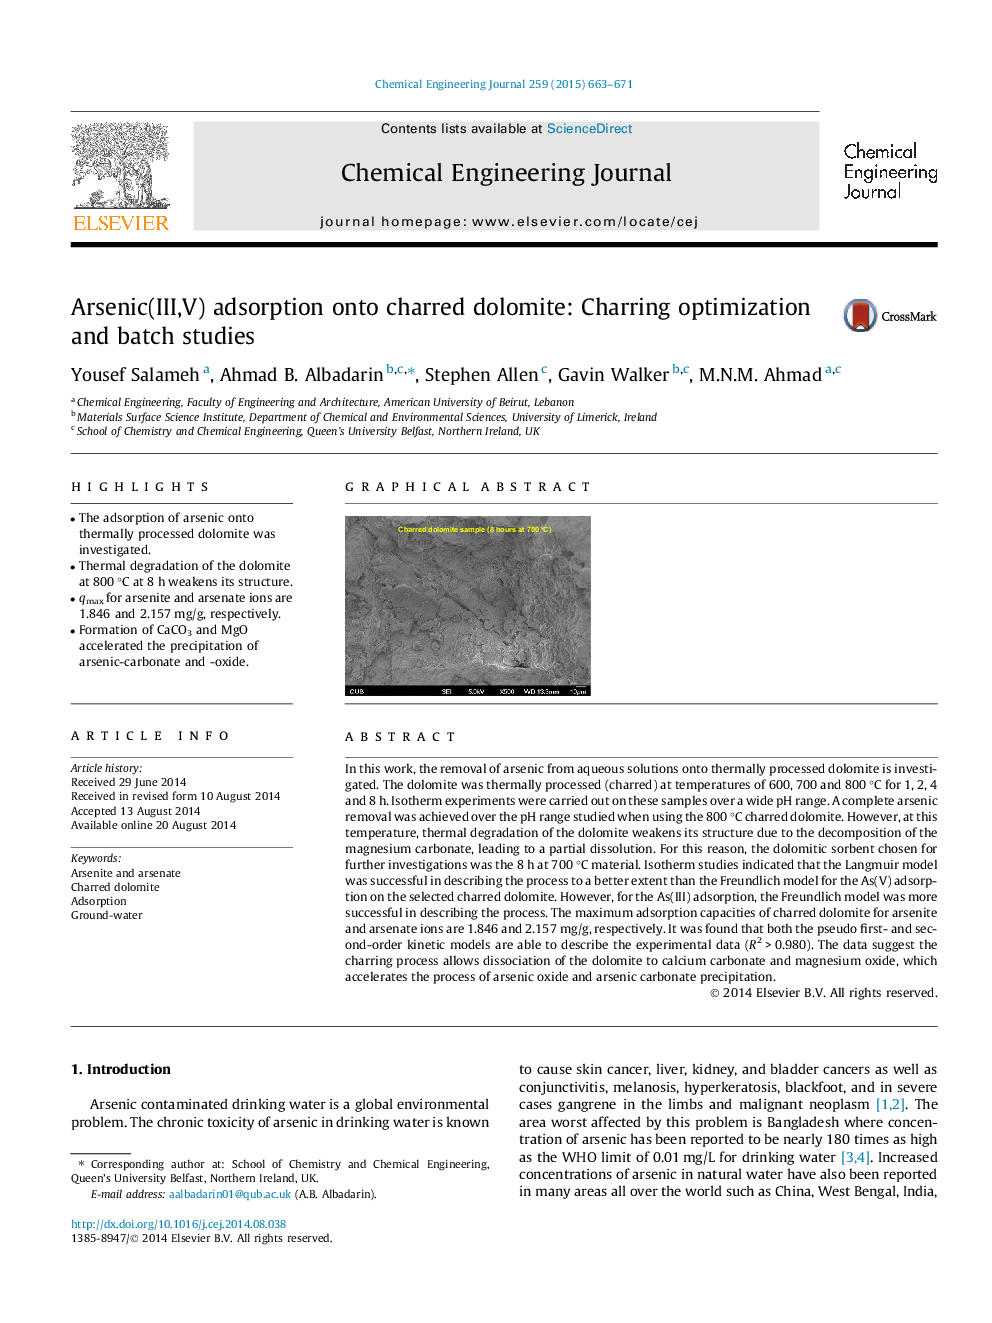 Arsenic(III,V) adsorption onto charred dolomite: Charring optimization and batch studies